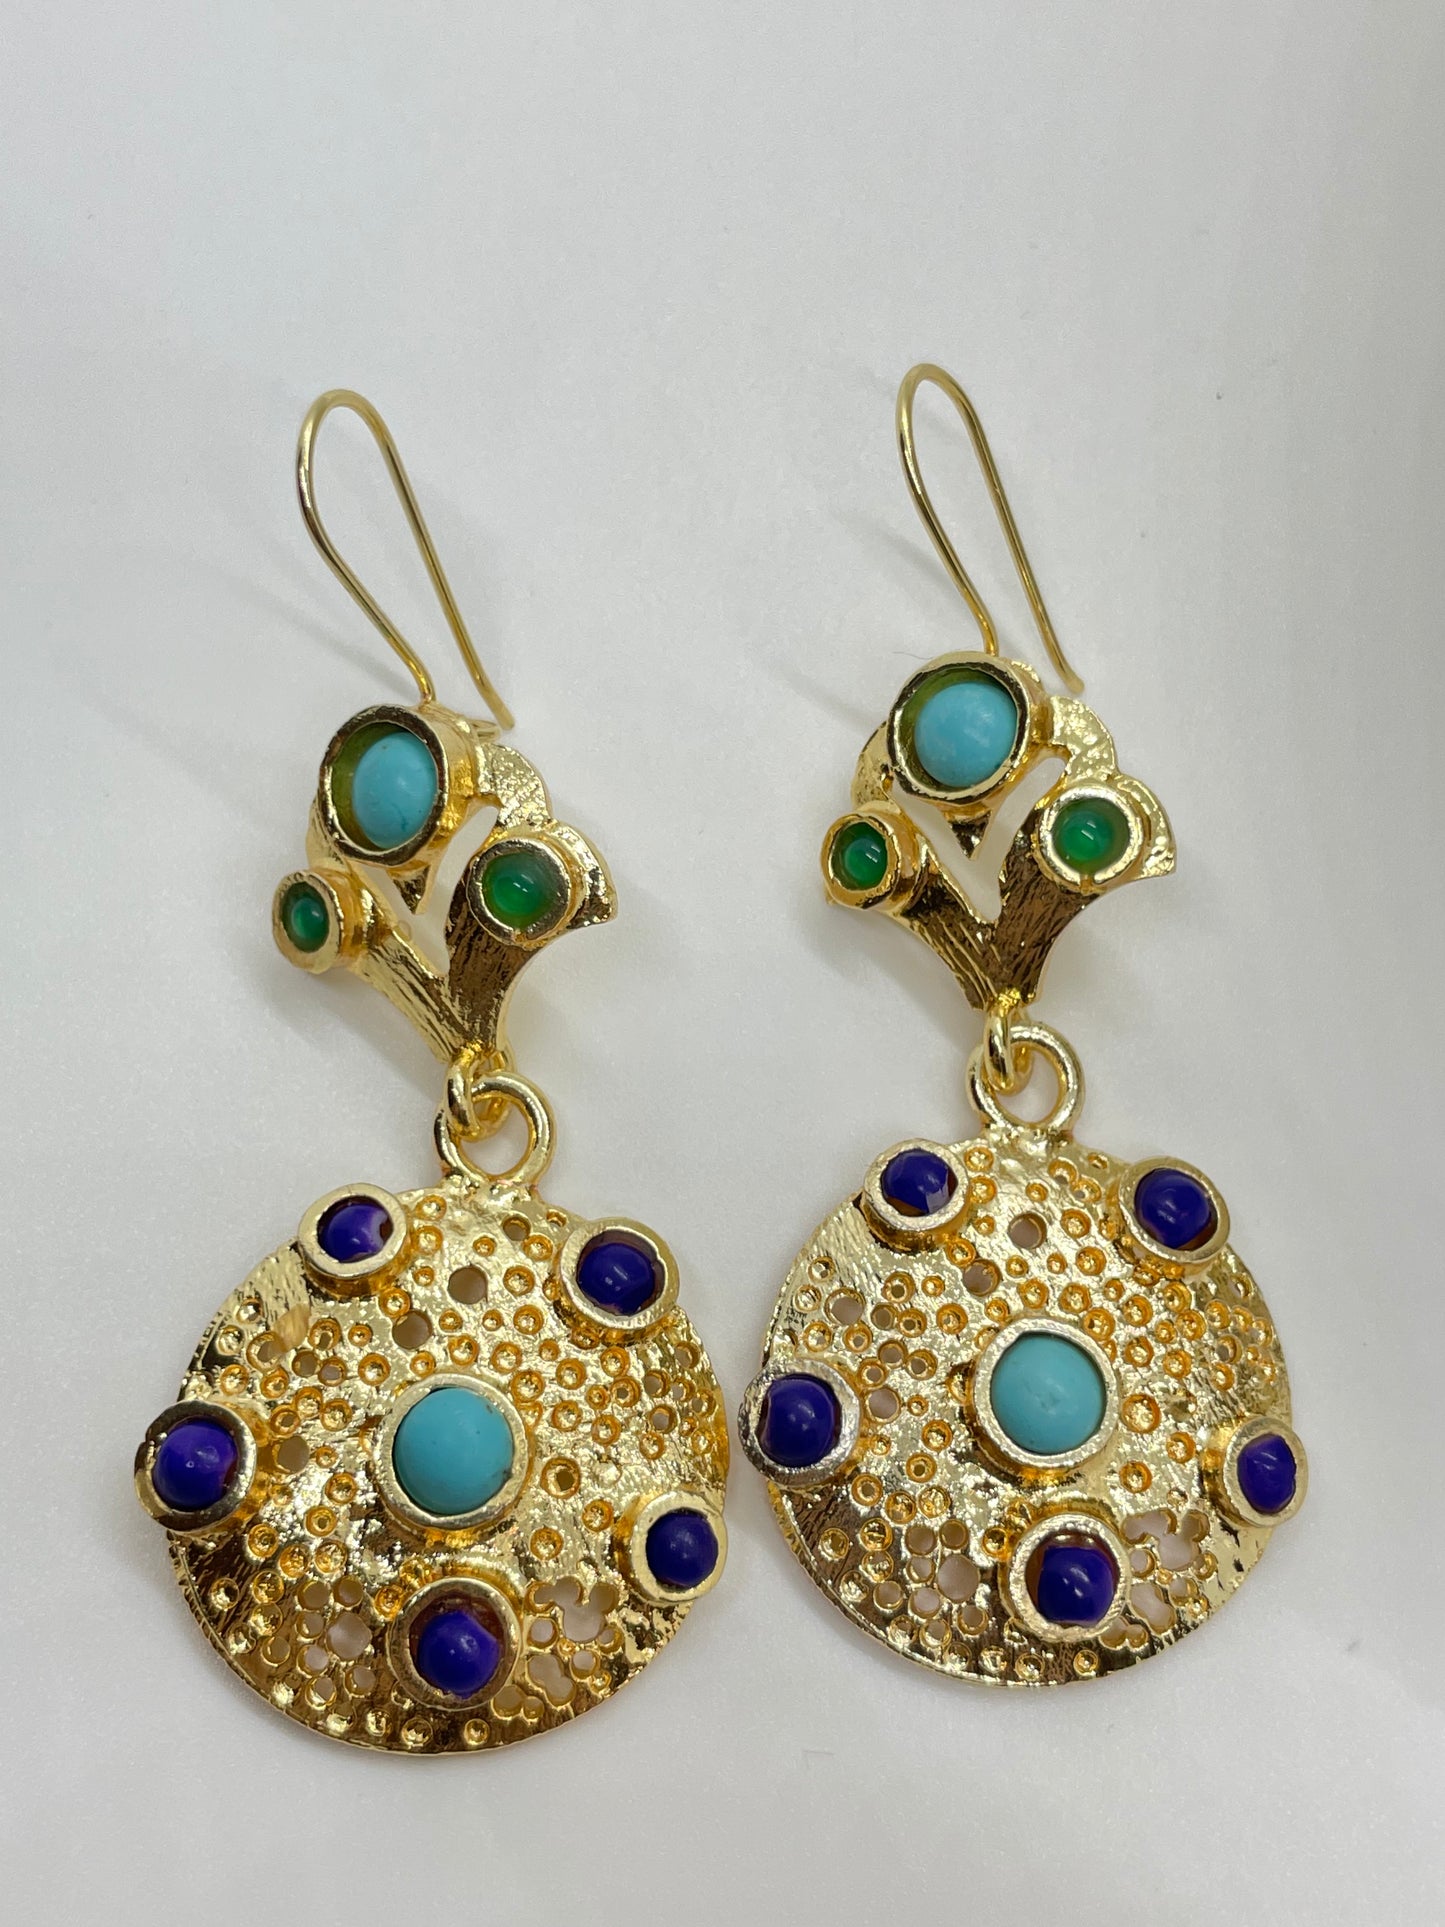 Ankara trio earrings